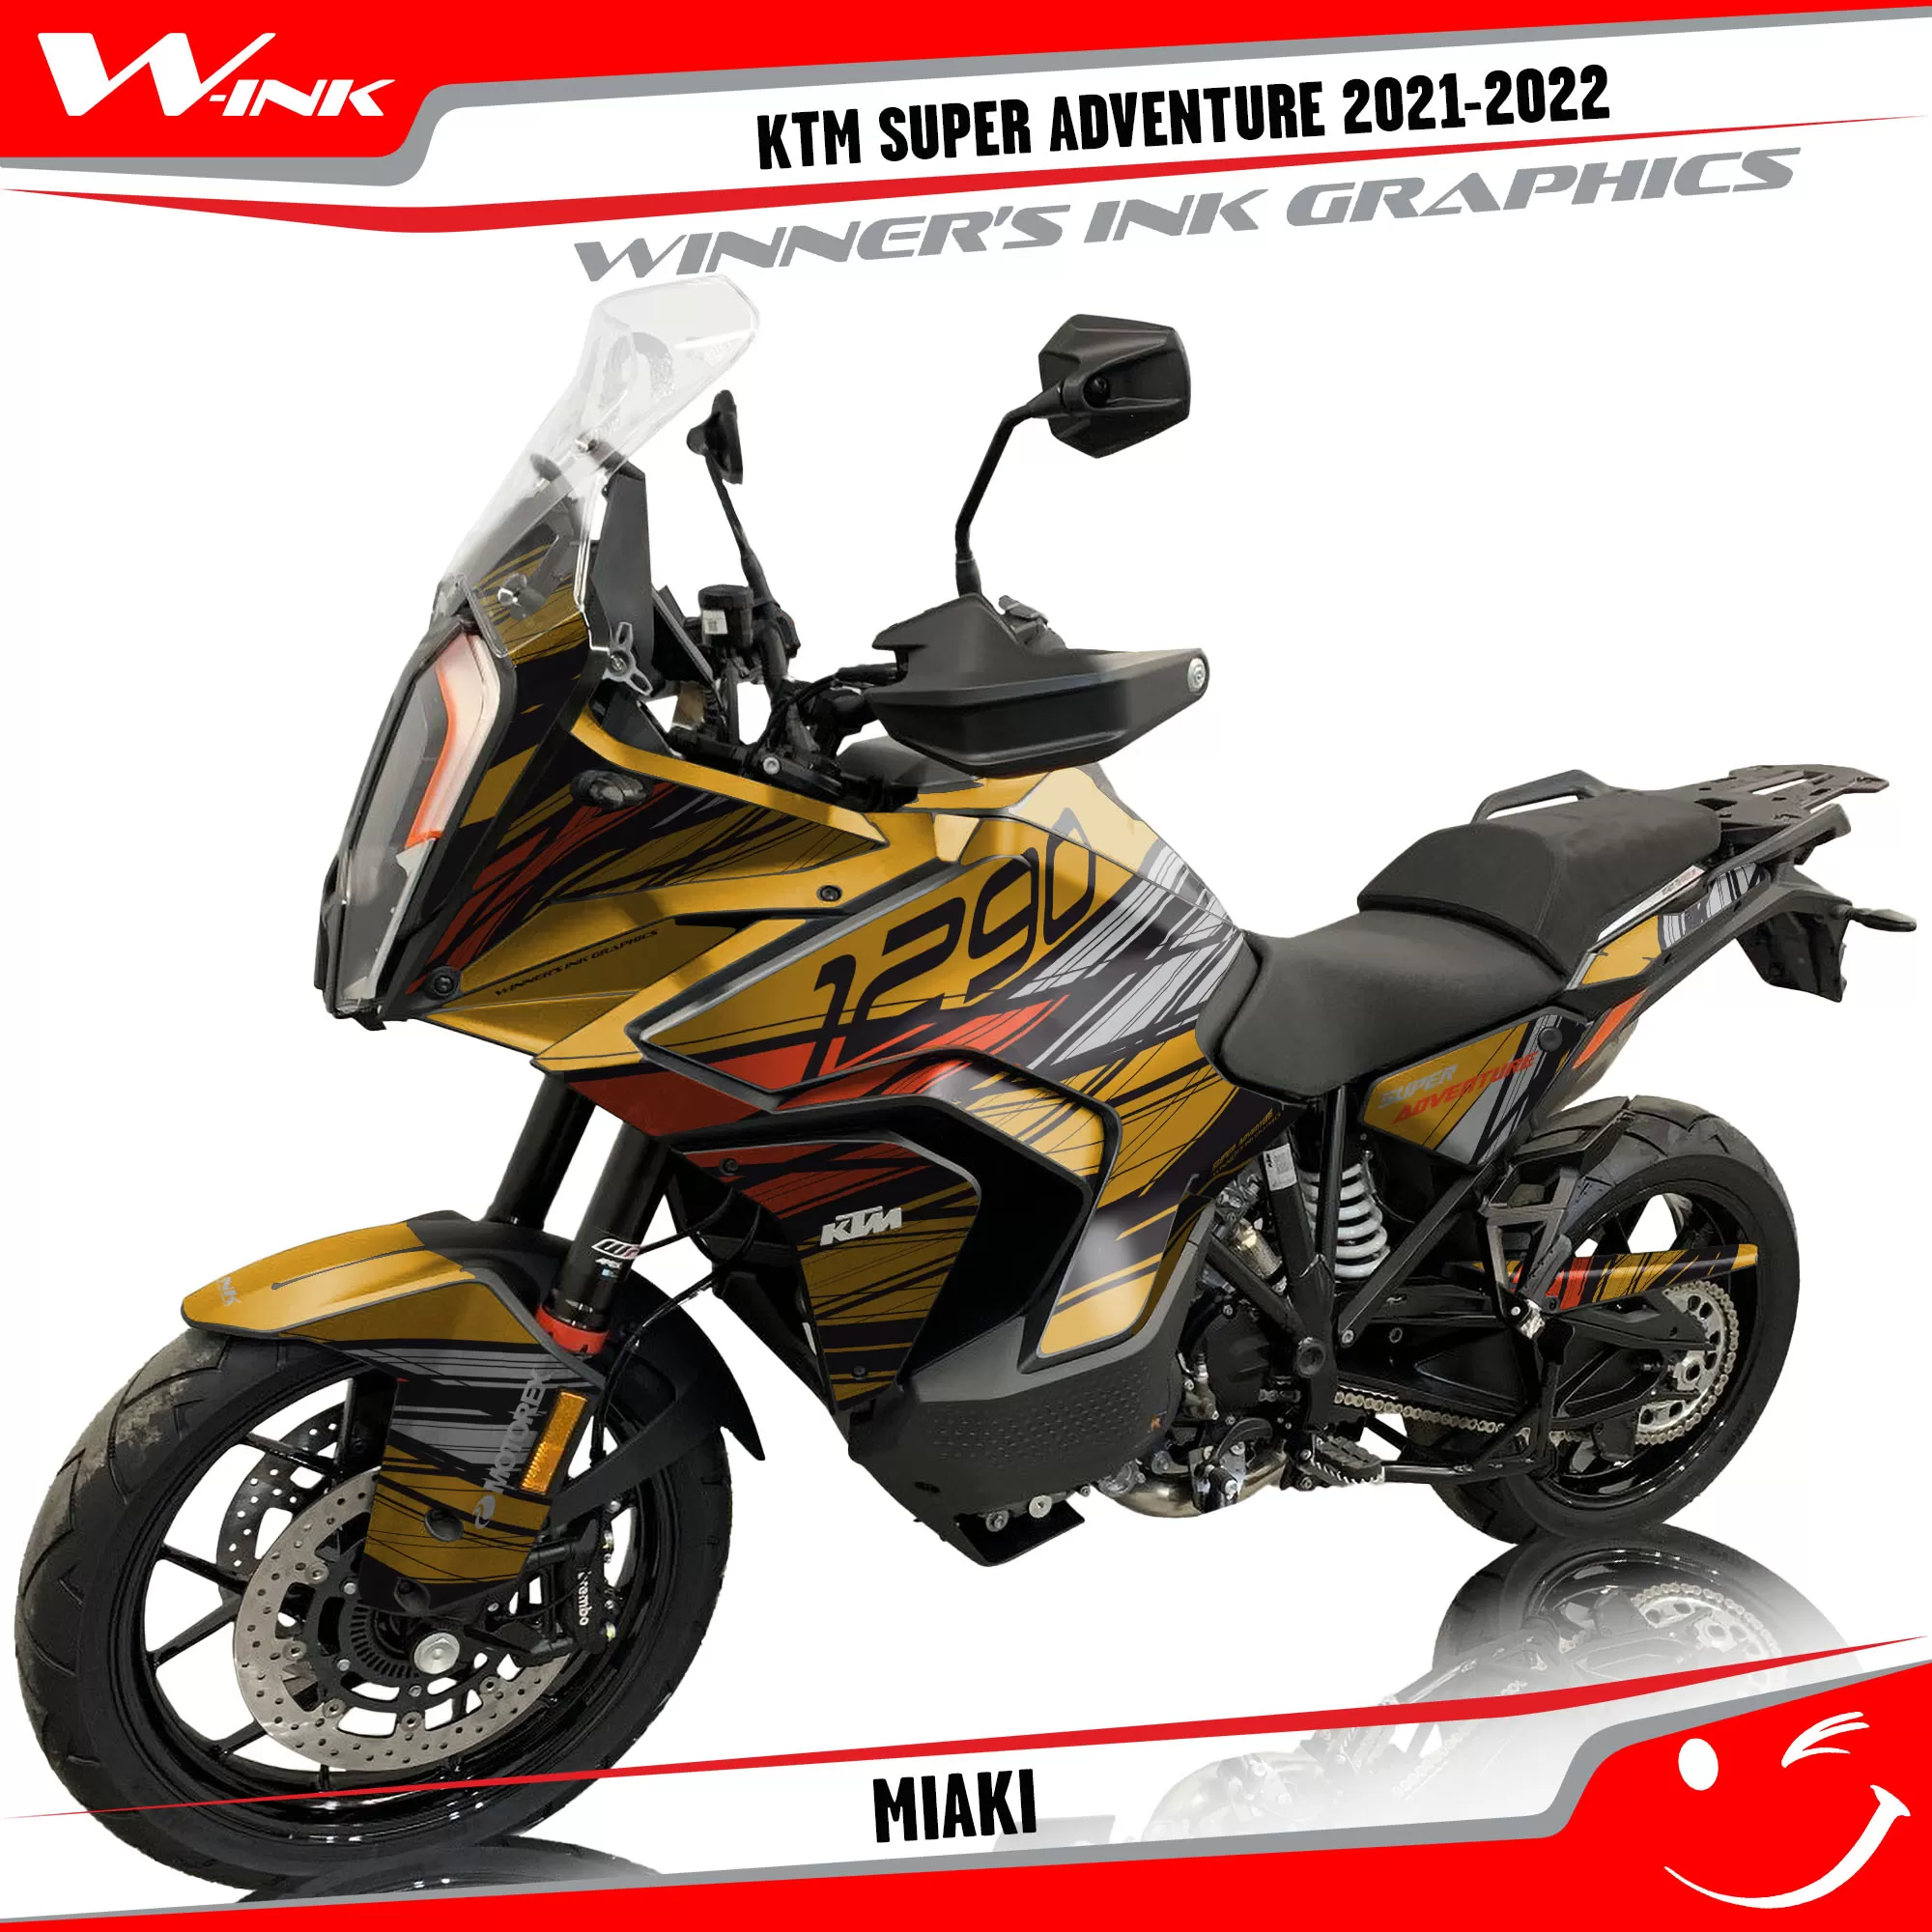 KTM-Super-Adventure-S-2021-2022-graphics-kit-and-decals-with-designs-Miaki